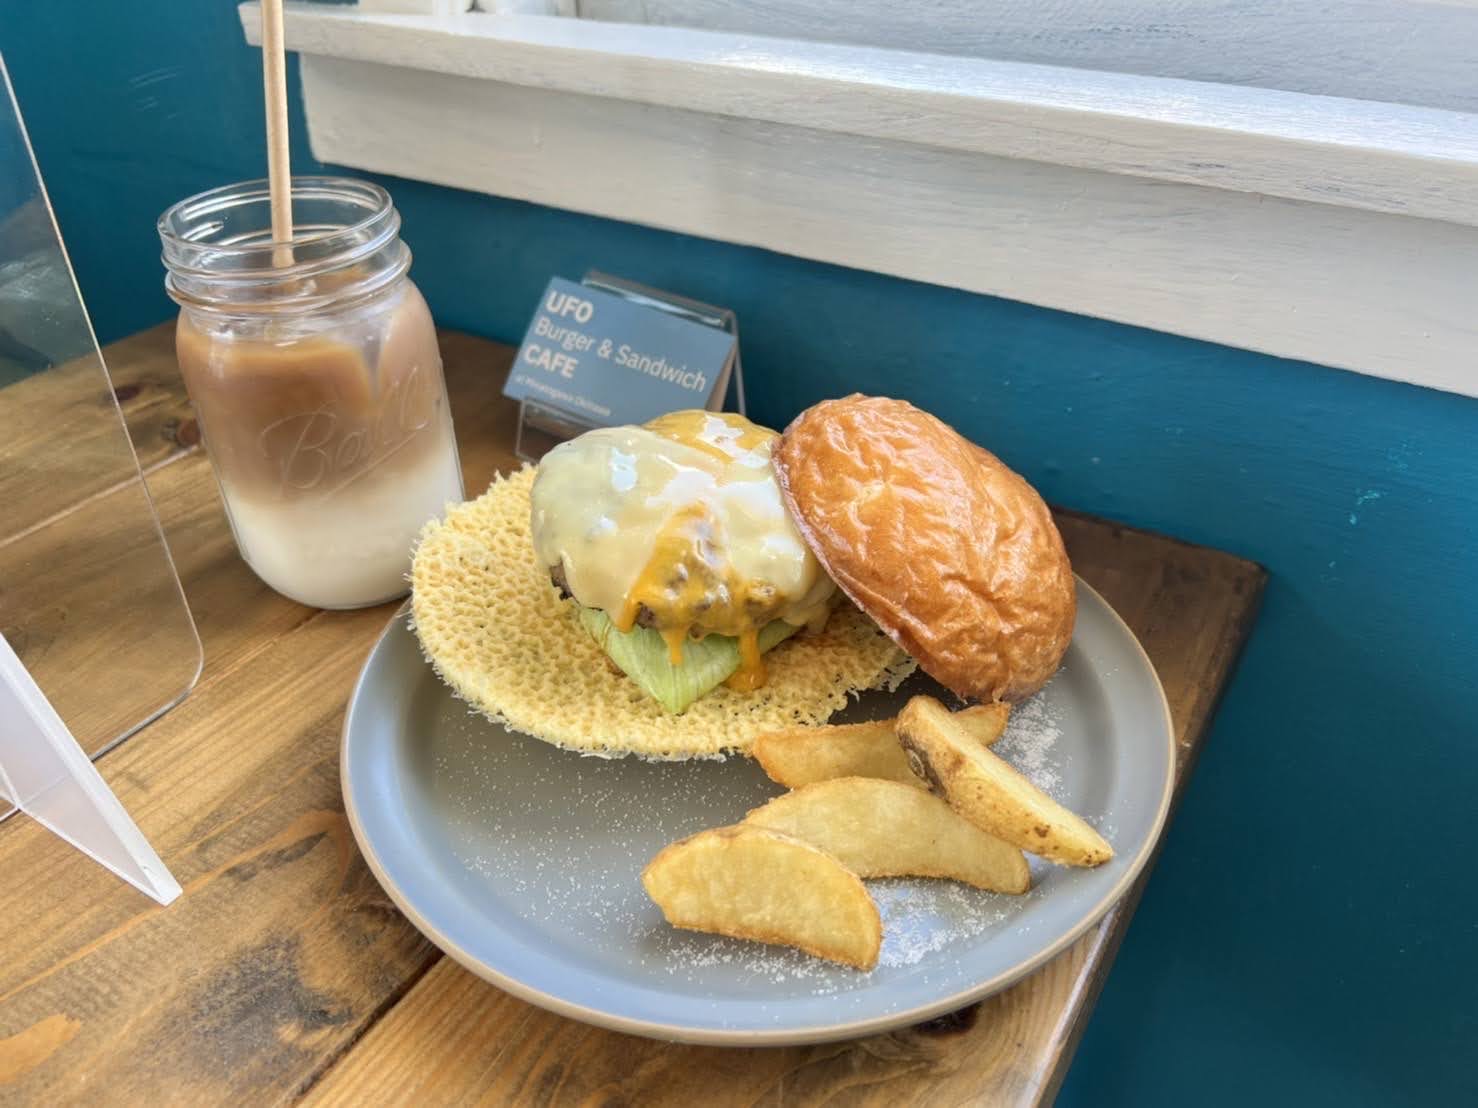 UFO Burger & Sandwich CAFEのハンバーガーの写真